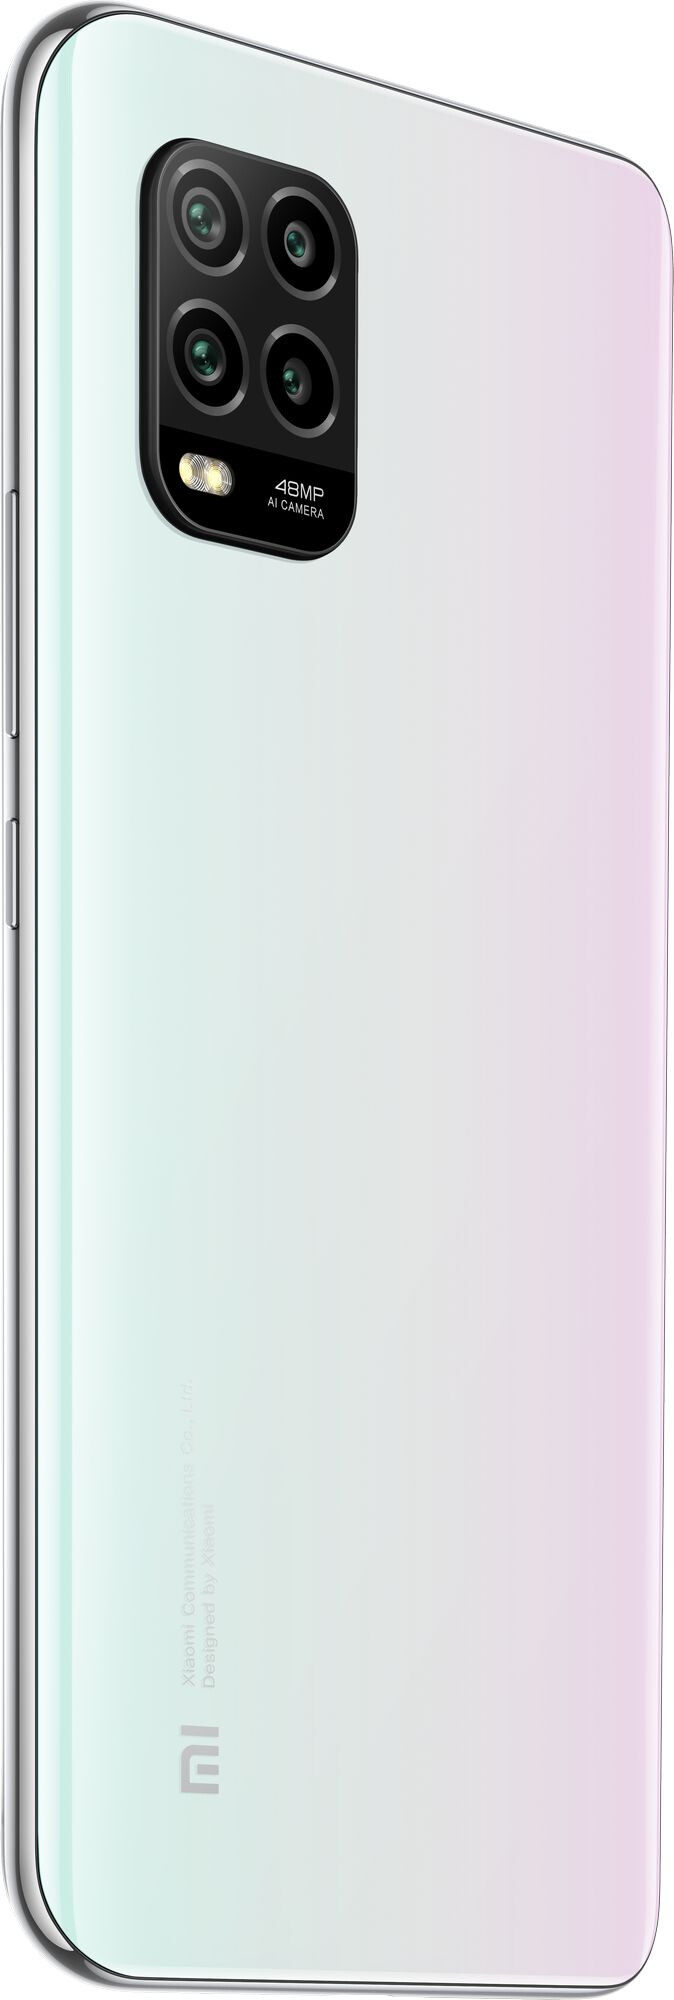 Смартфон Xiaomi Mi 10 Lite 6/128GB White (Белый)